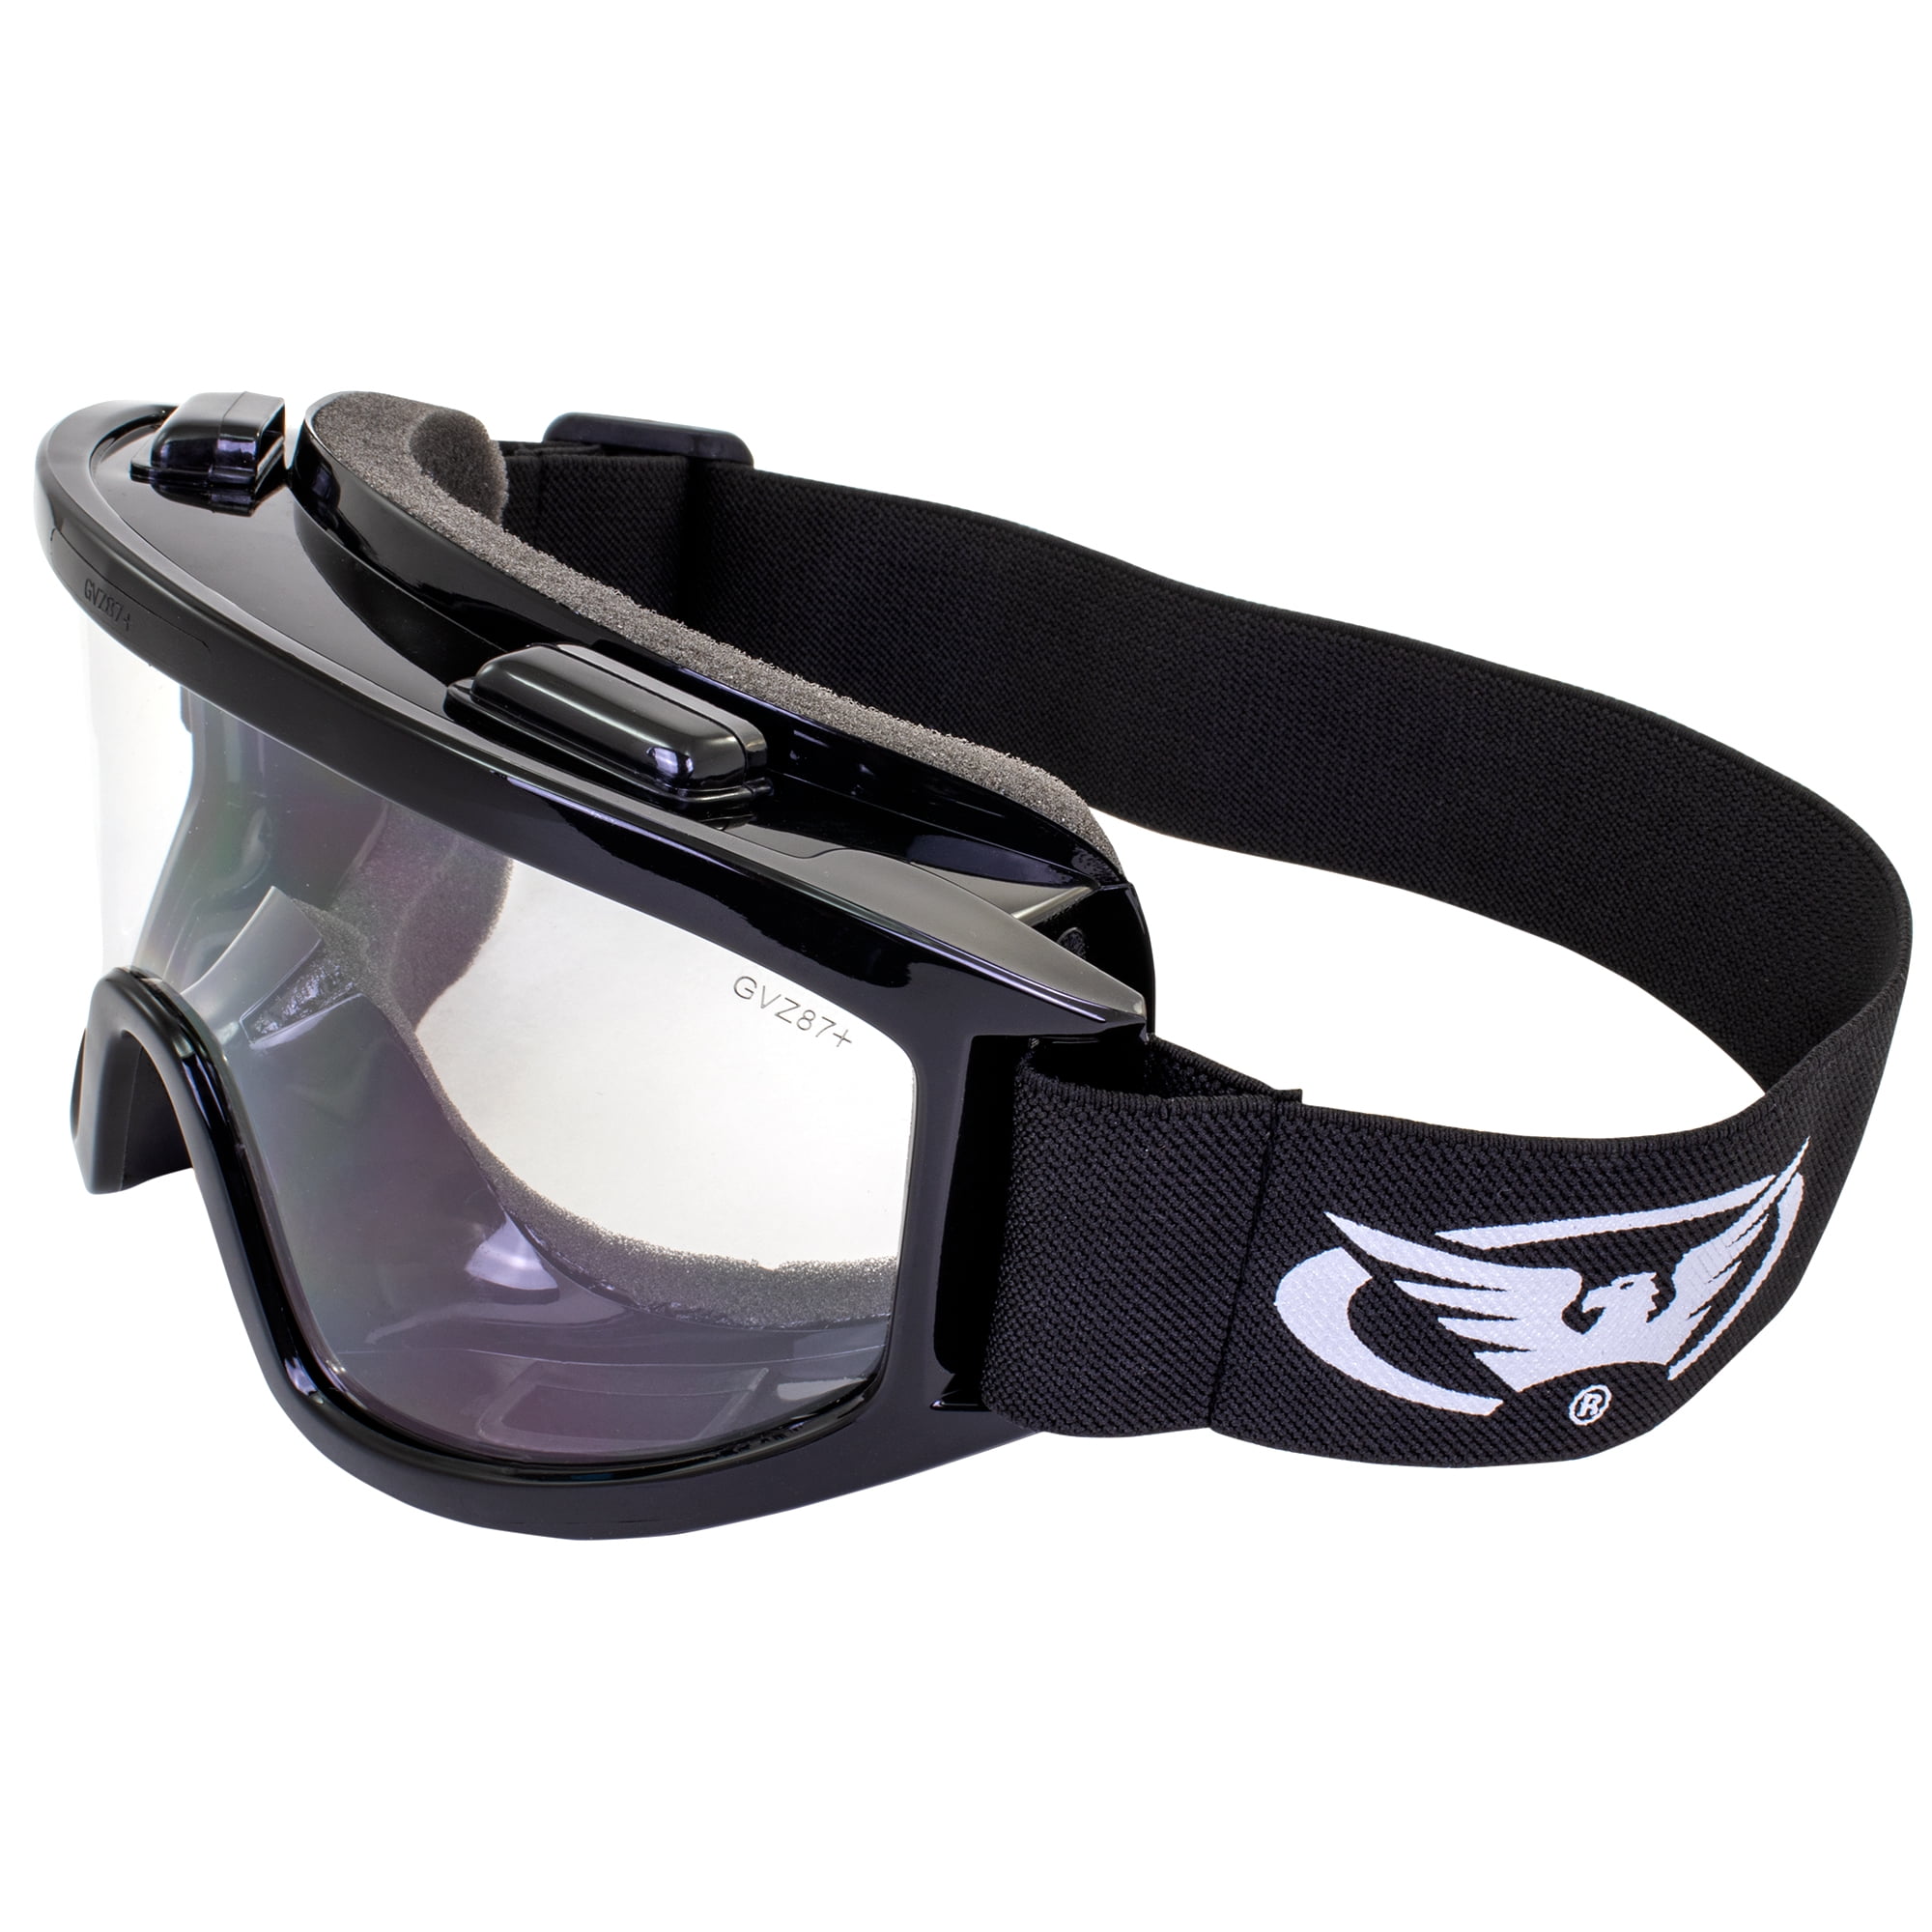 Unisex Adult MX Goggles ATV Dirt Bike Eyewear Glasses Racing Protect Tinted Lens 